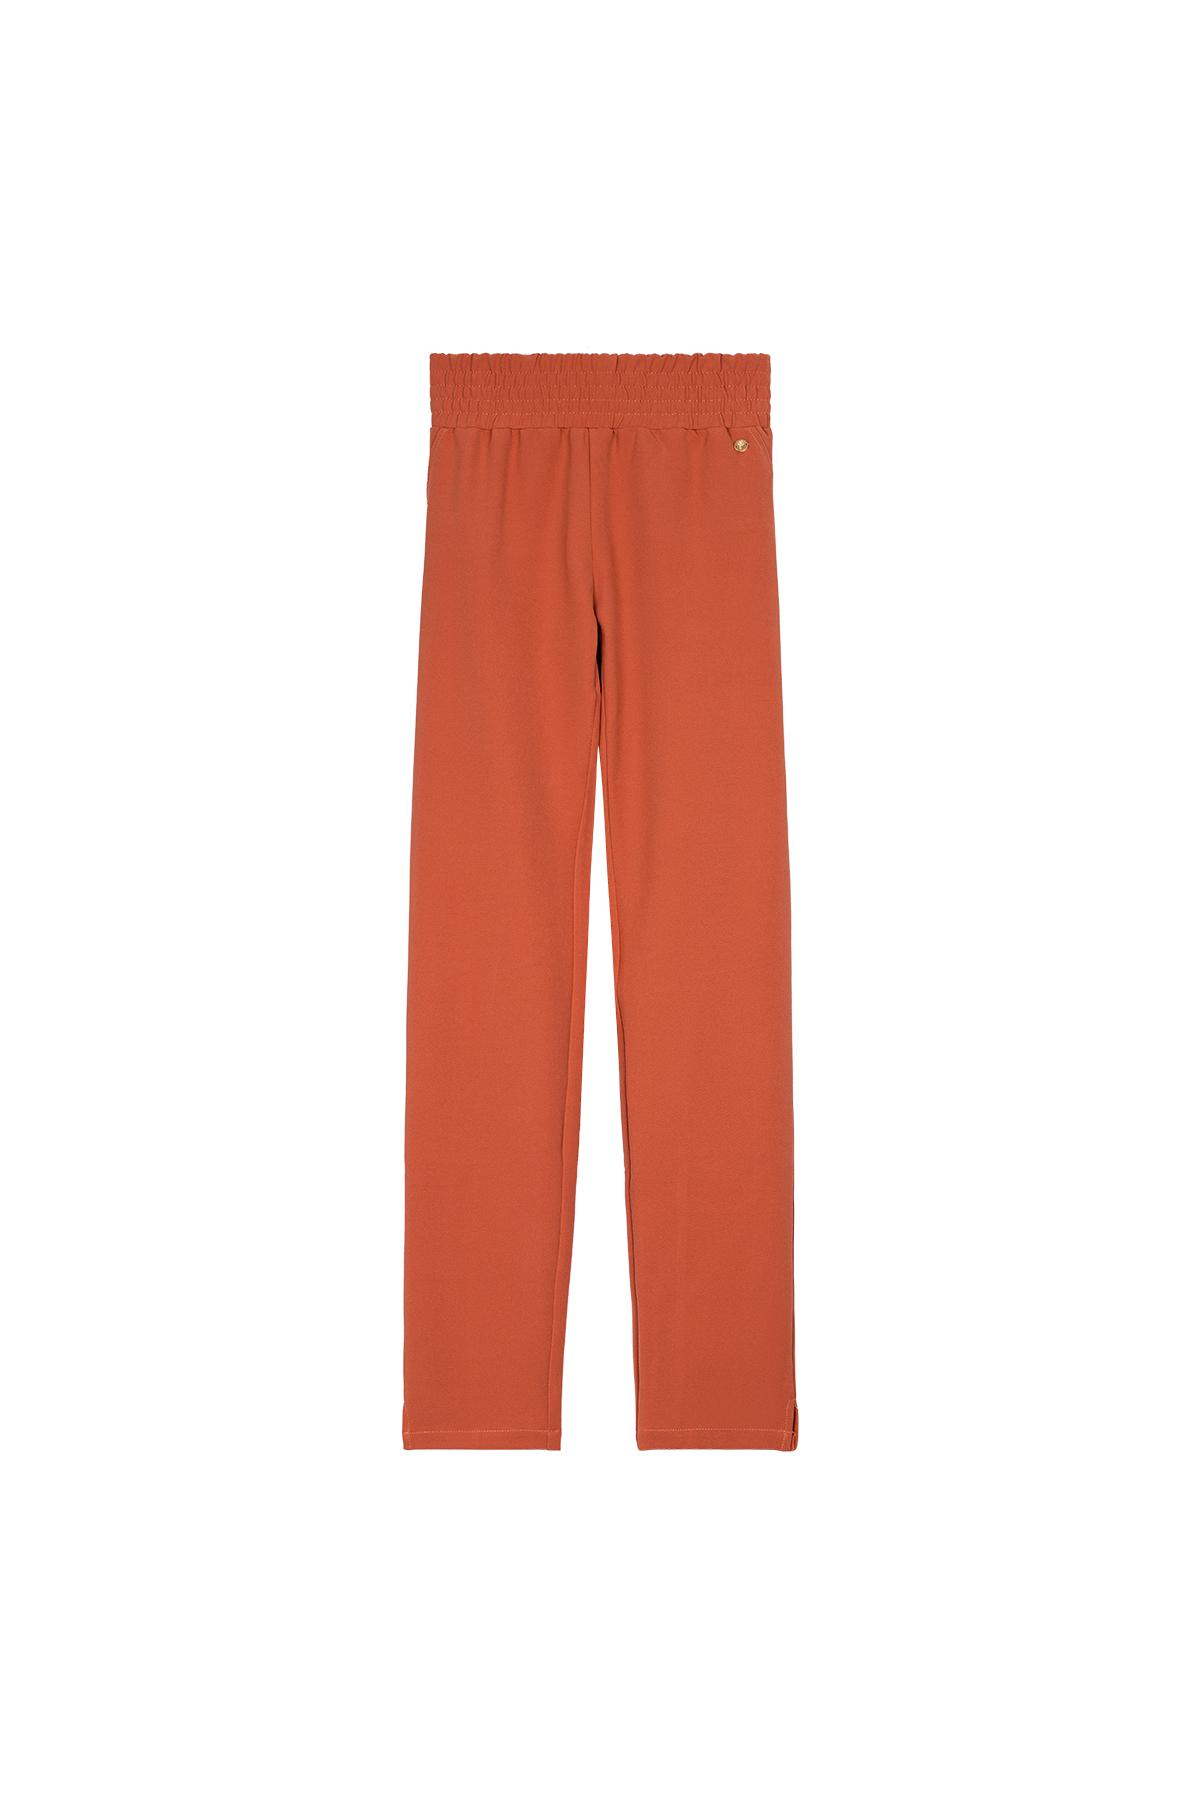 Pantalon coupe slim Orange S 